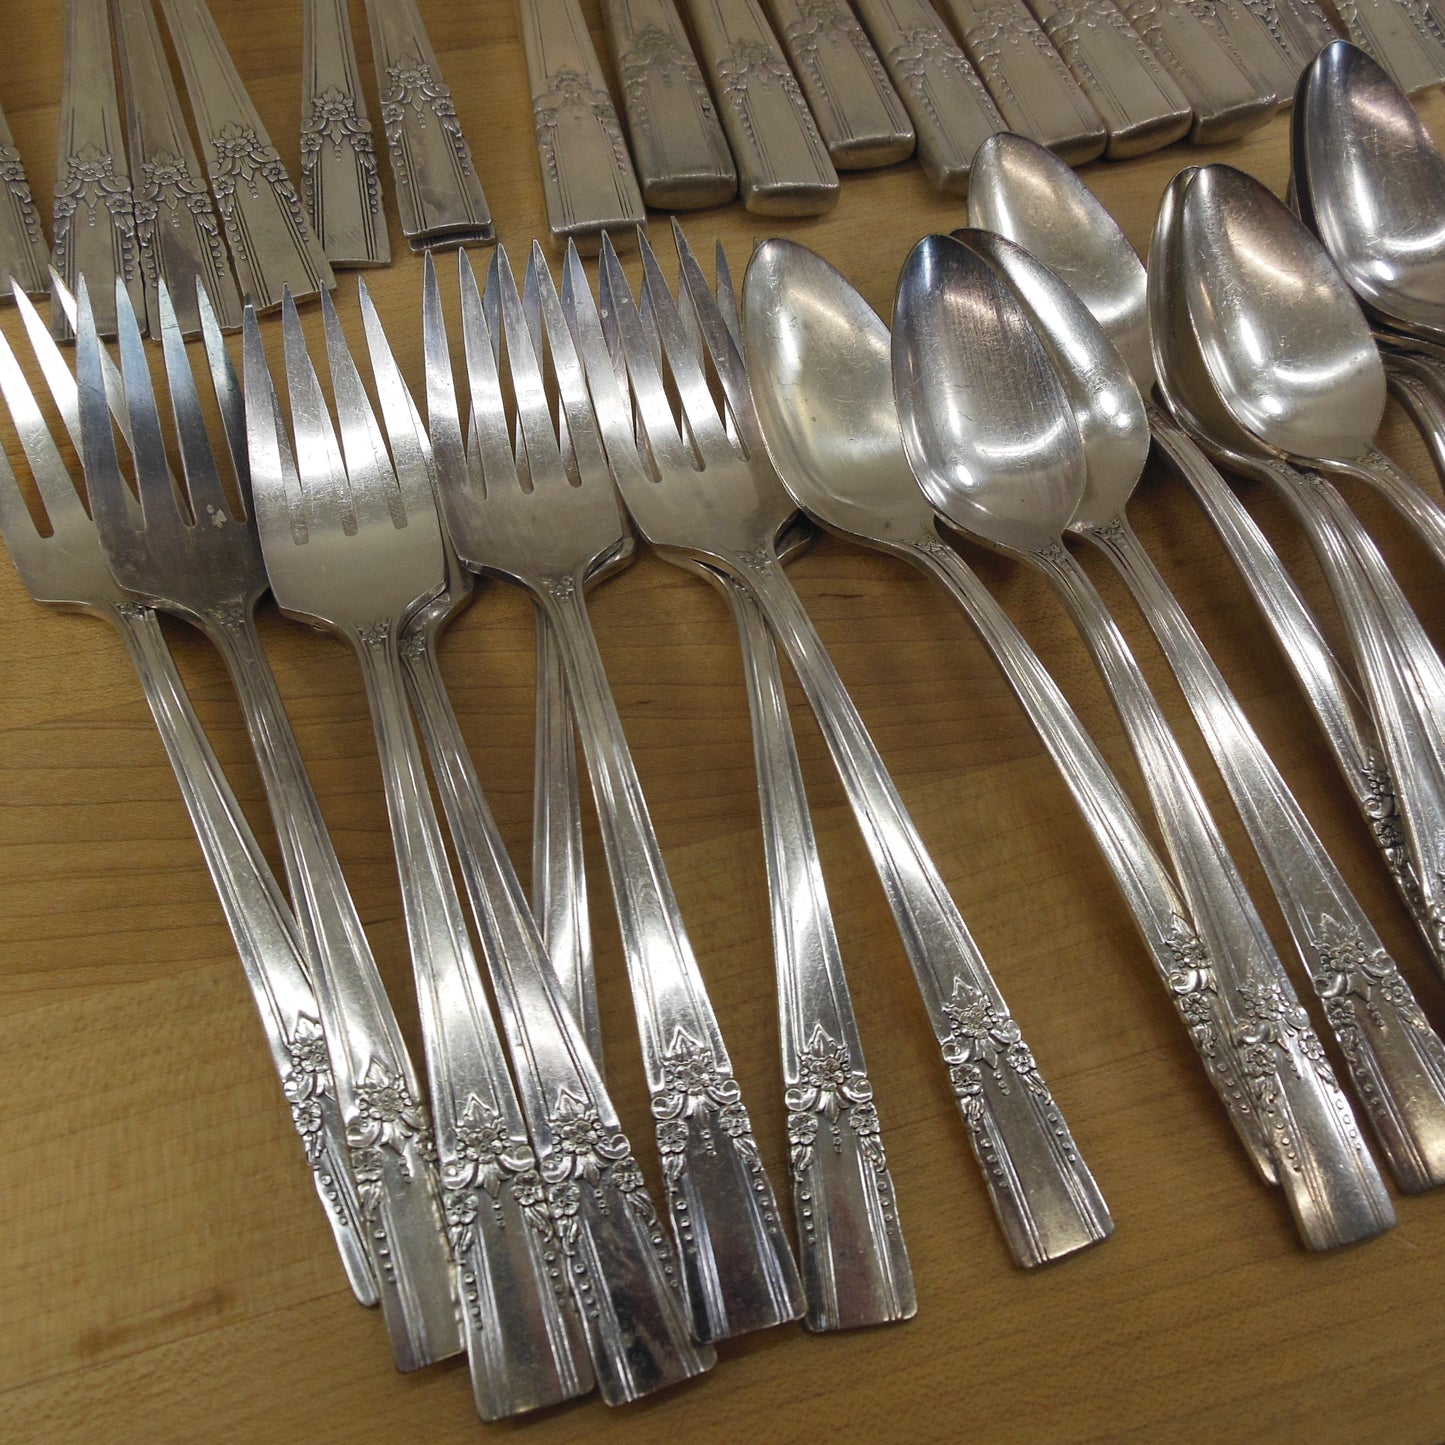 Wm. A. Rogers Oneida Artistic Silverplate Flatware 46 Pieces forks